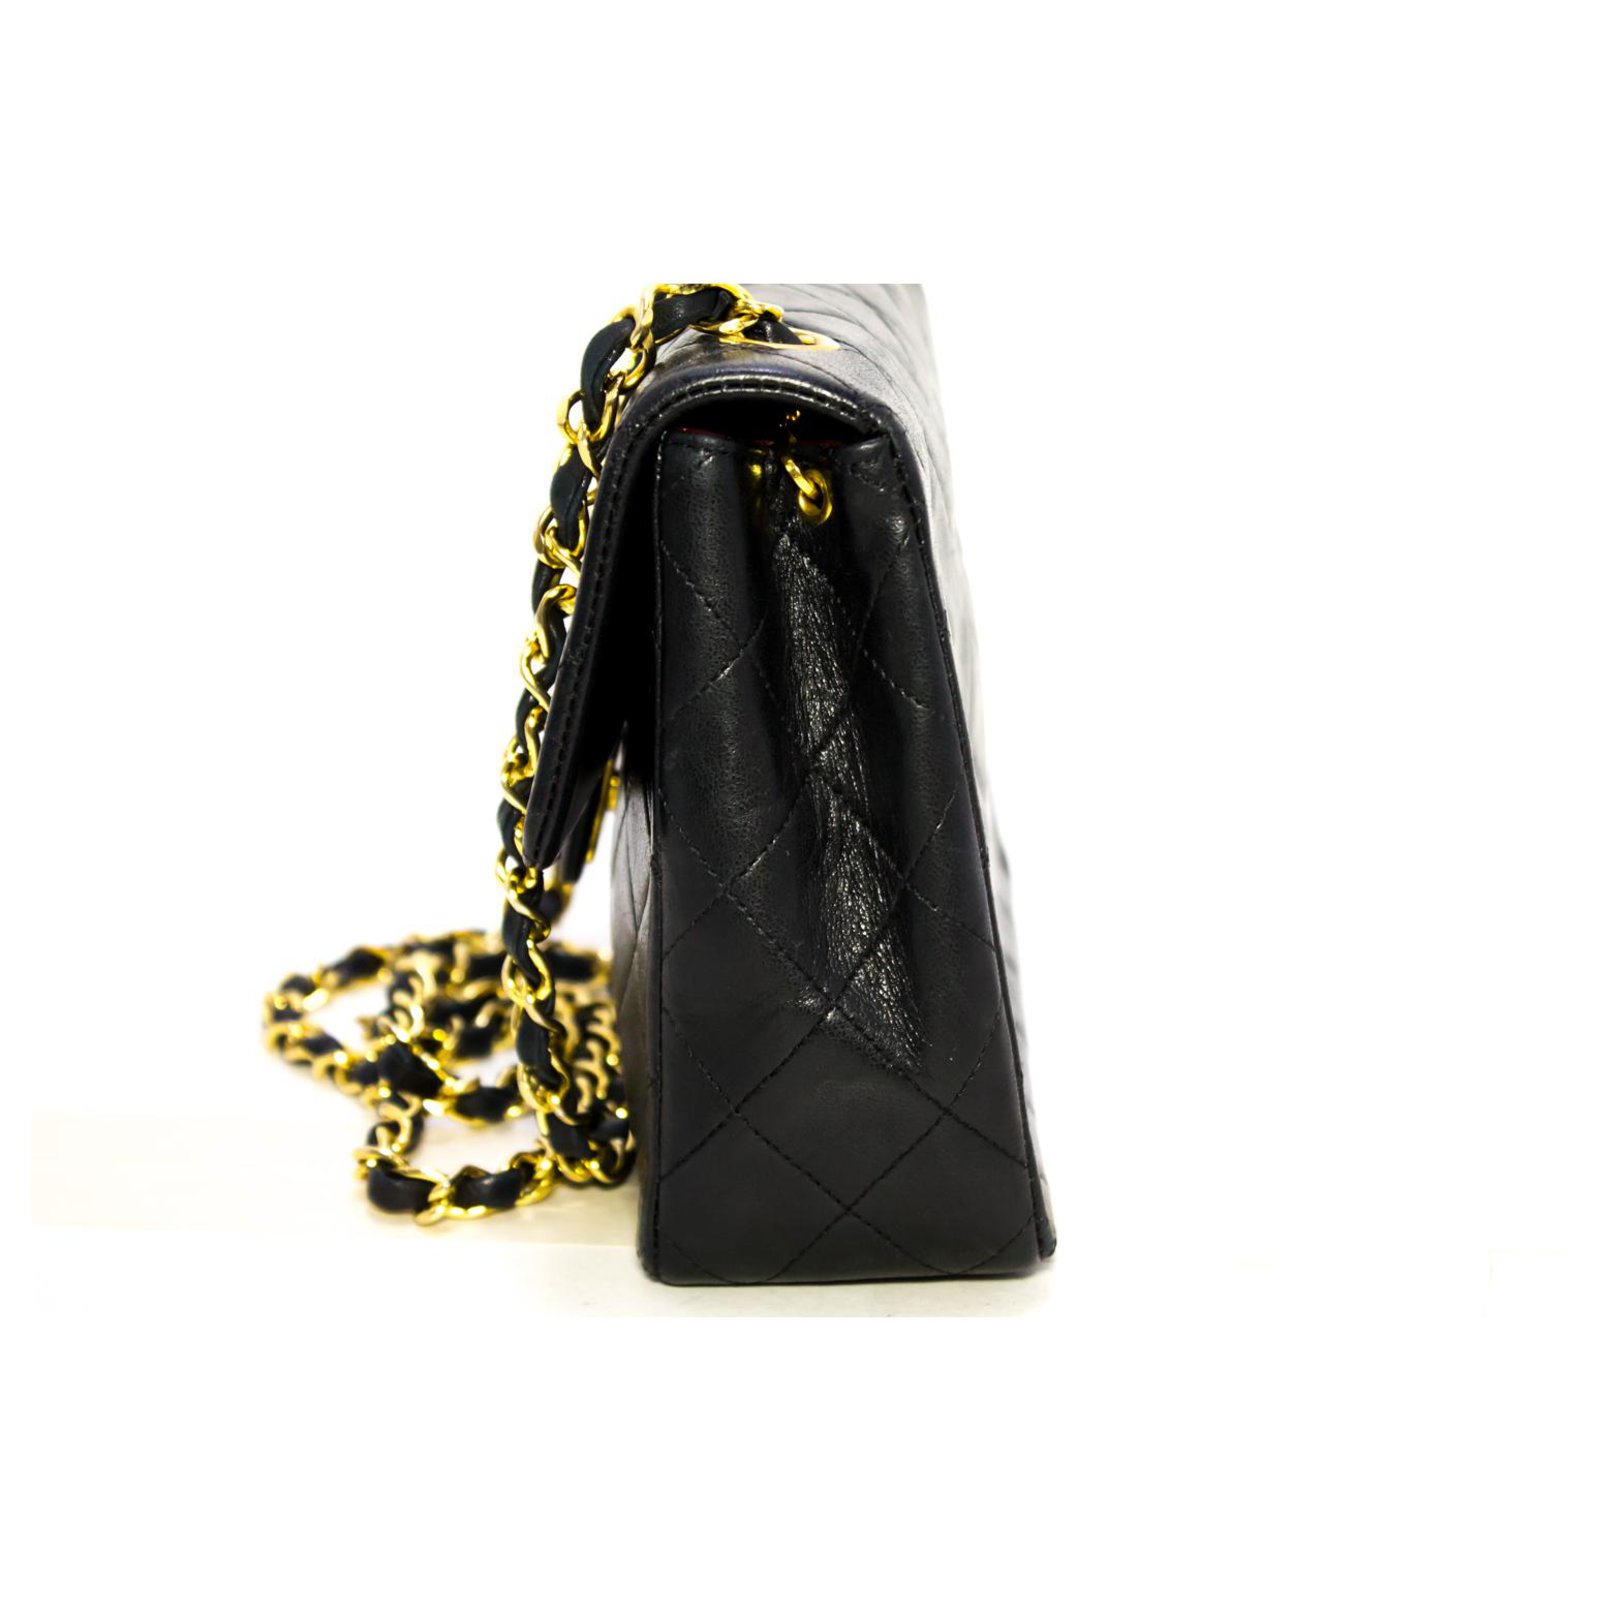 Chanel Mini Square Small Chain Shoulder Bag Crossbody Black Quilt L03